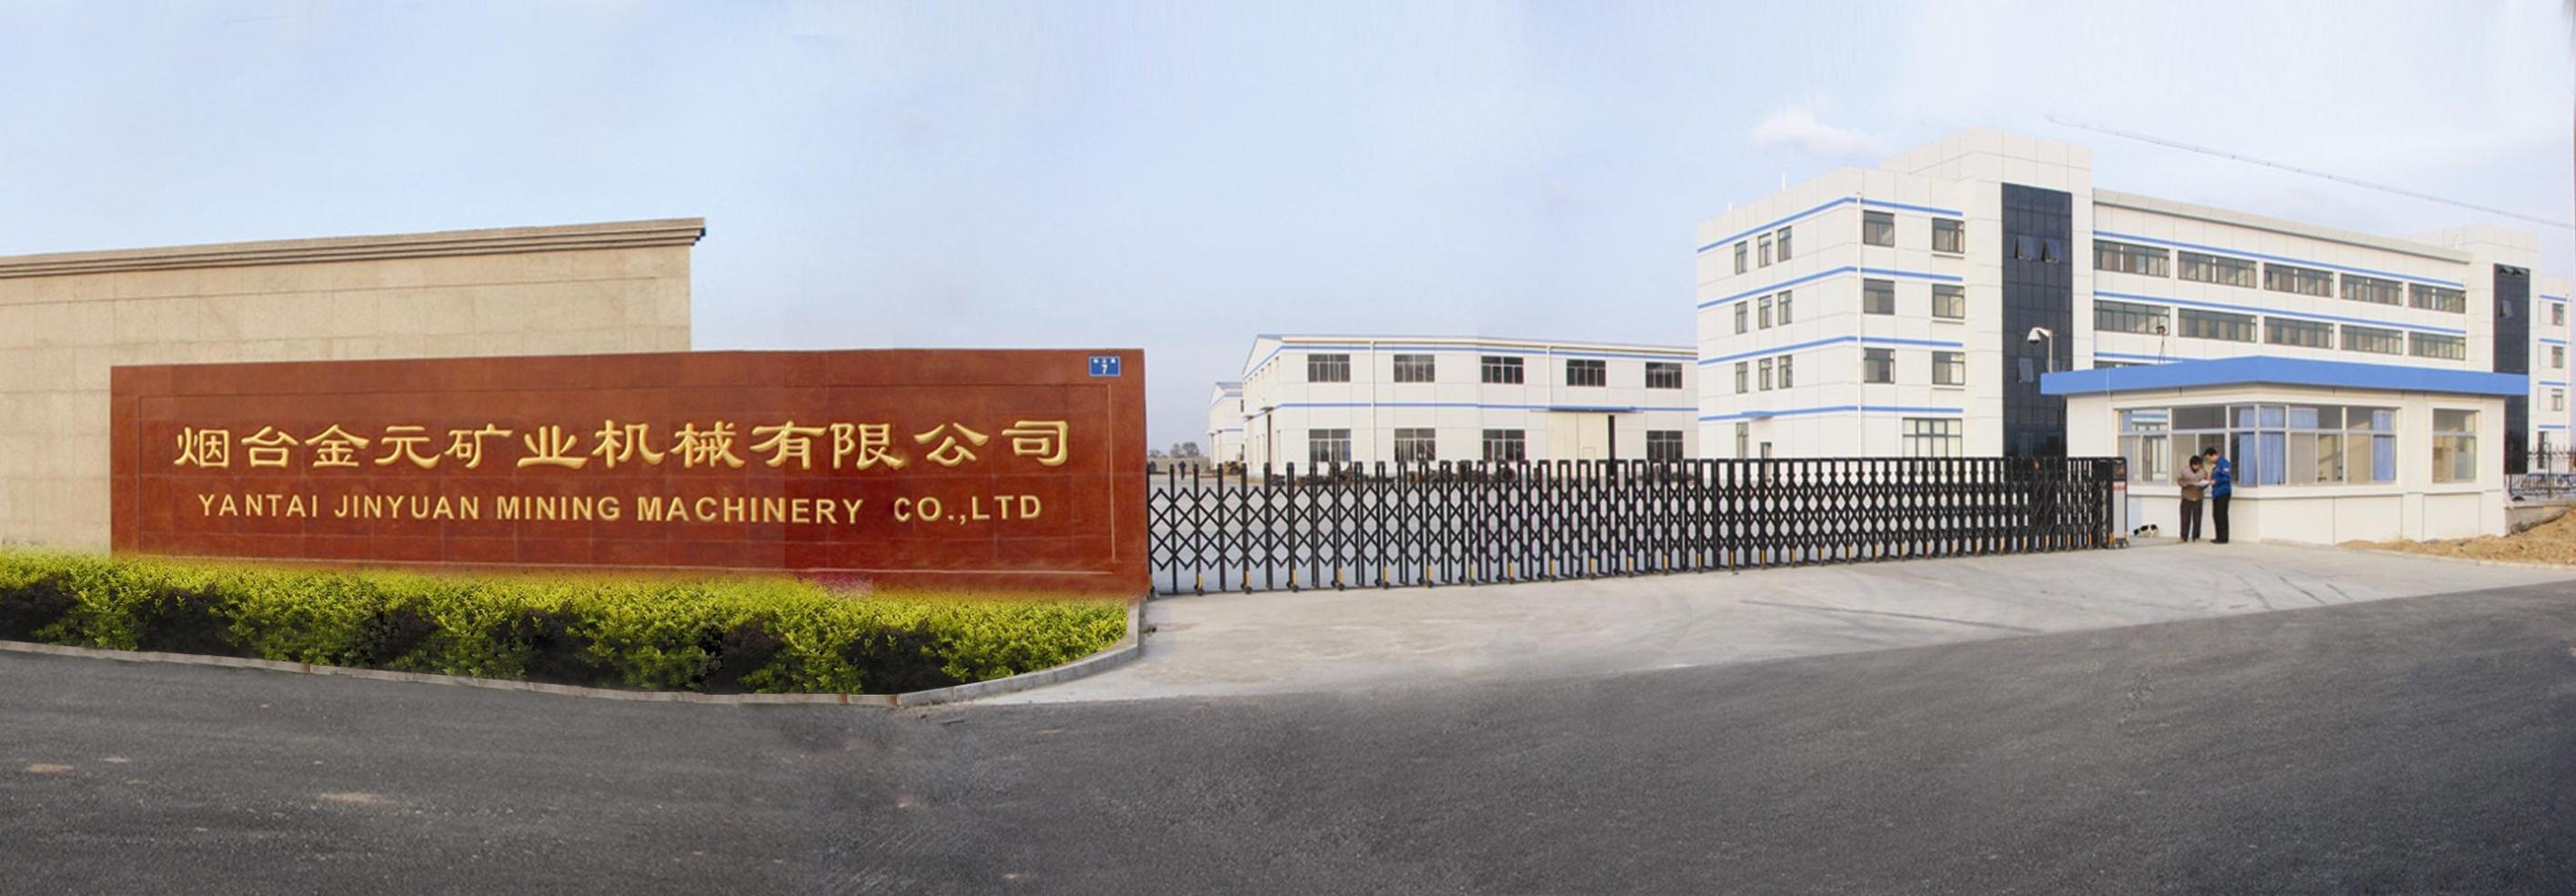 Yantai Jinyuan Mining Machinery Co.,ltd